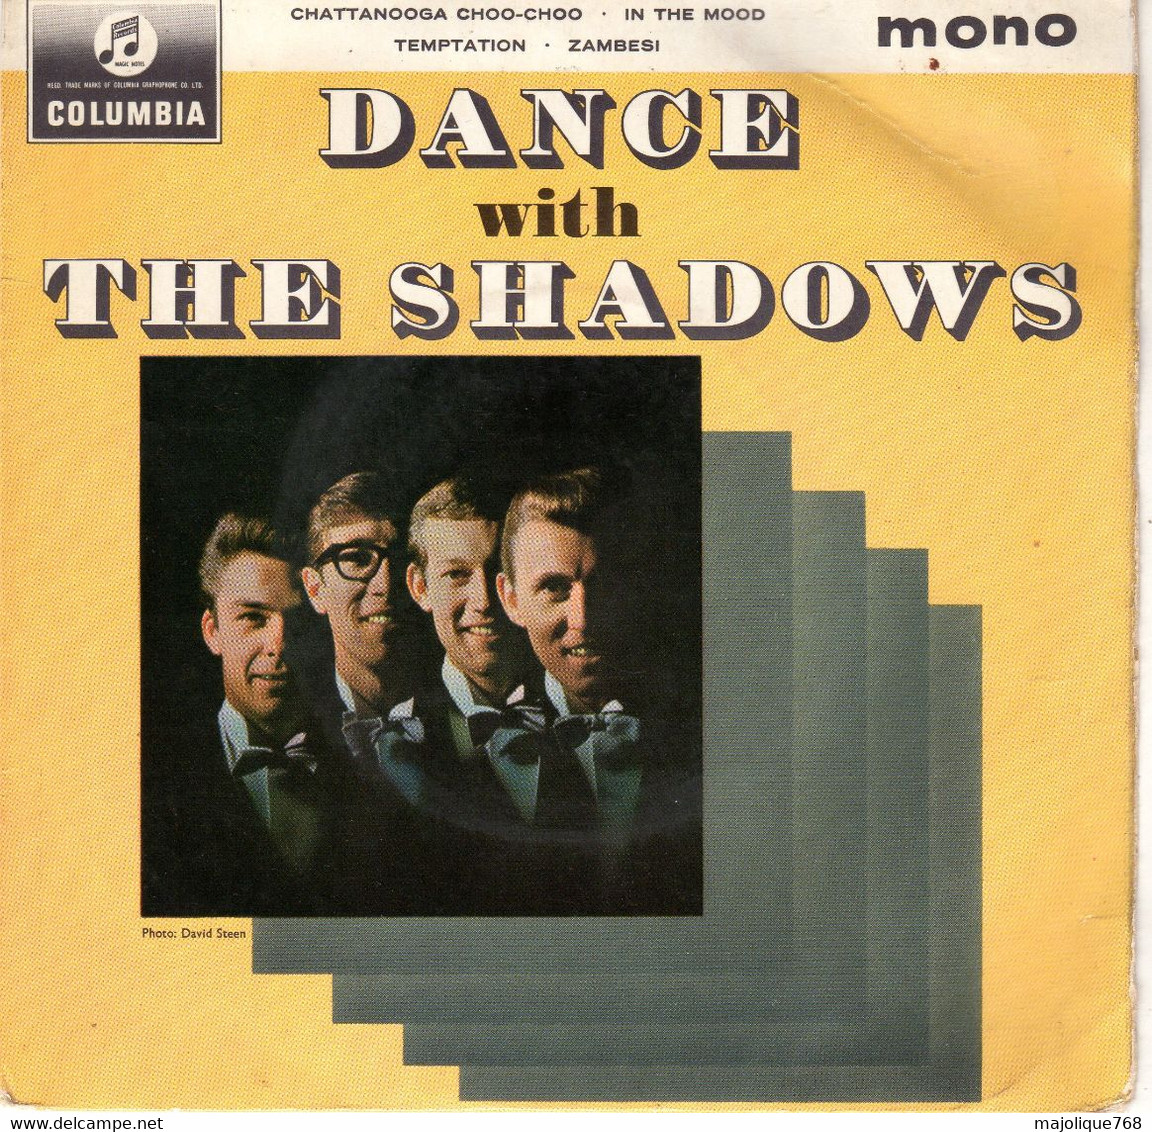 Disque The Shadows - Dance With The Shadows - Columbia SEG 8342 - U K 1964 - - Instrumentaal